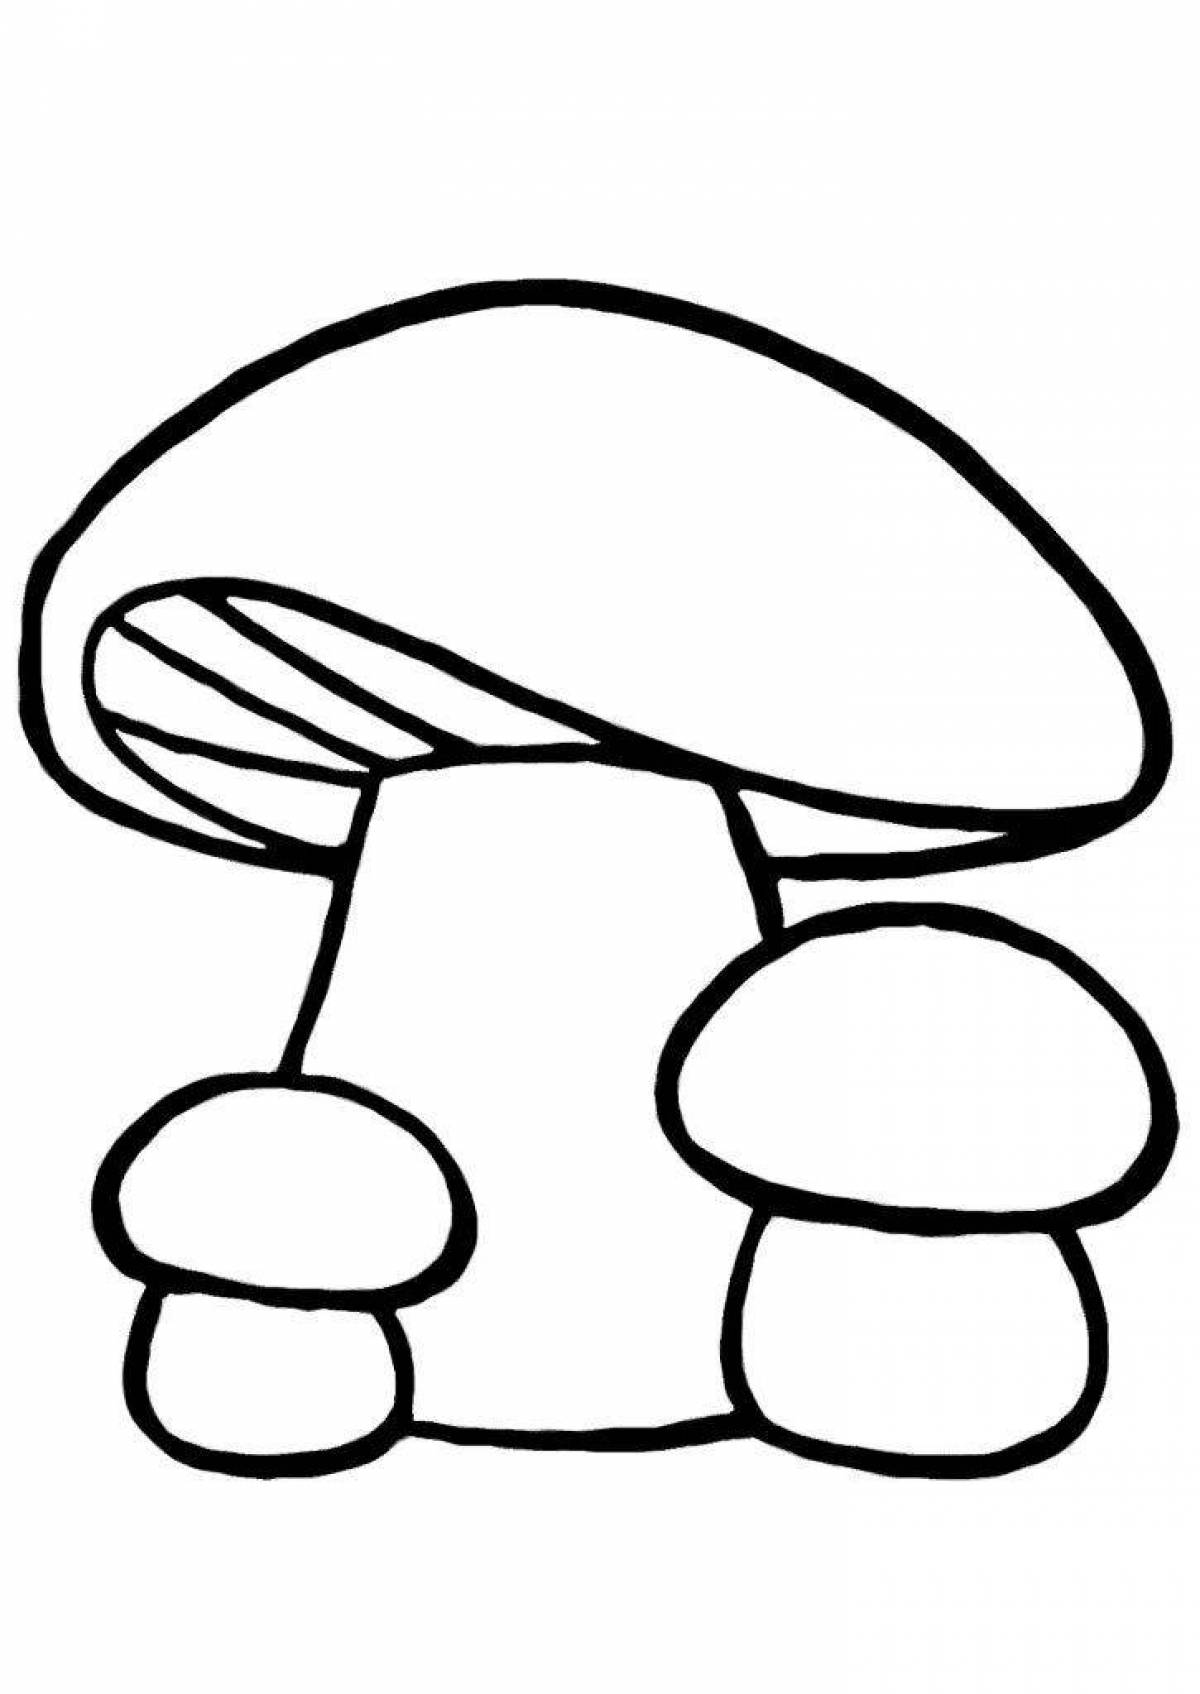 Coloring page amazing boletus mushroom